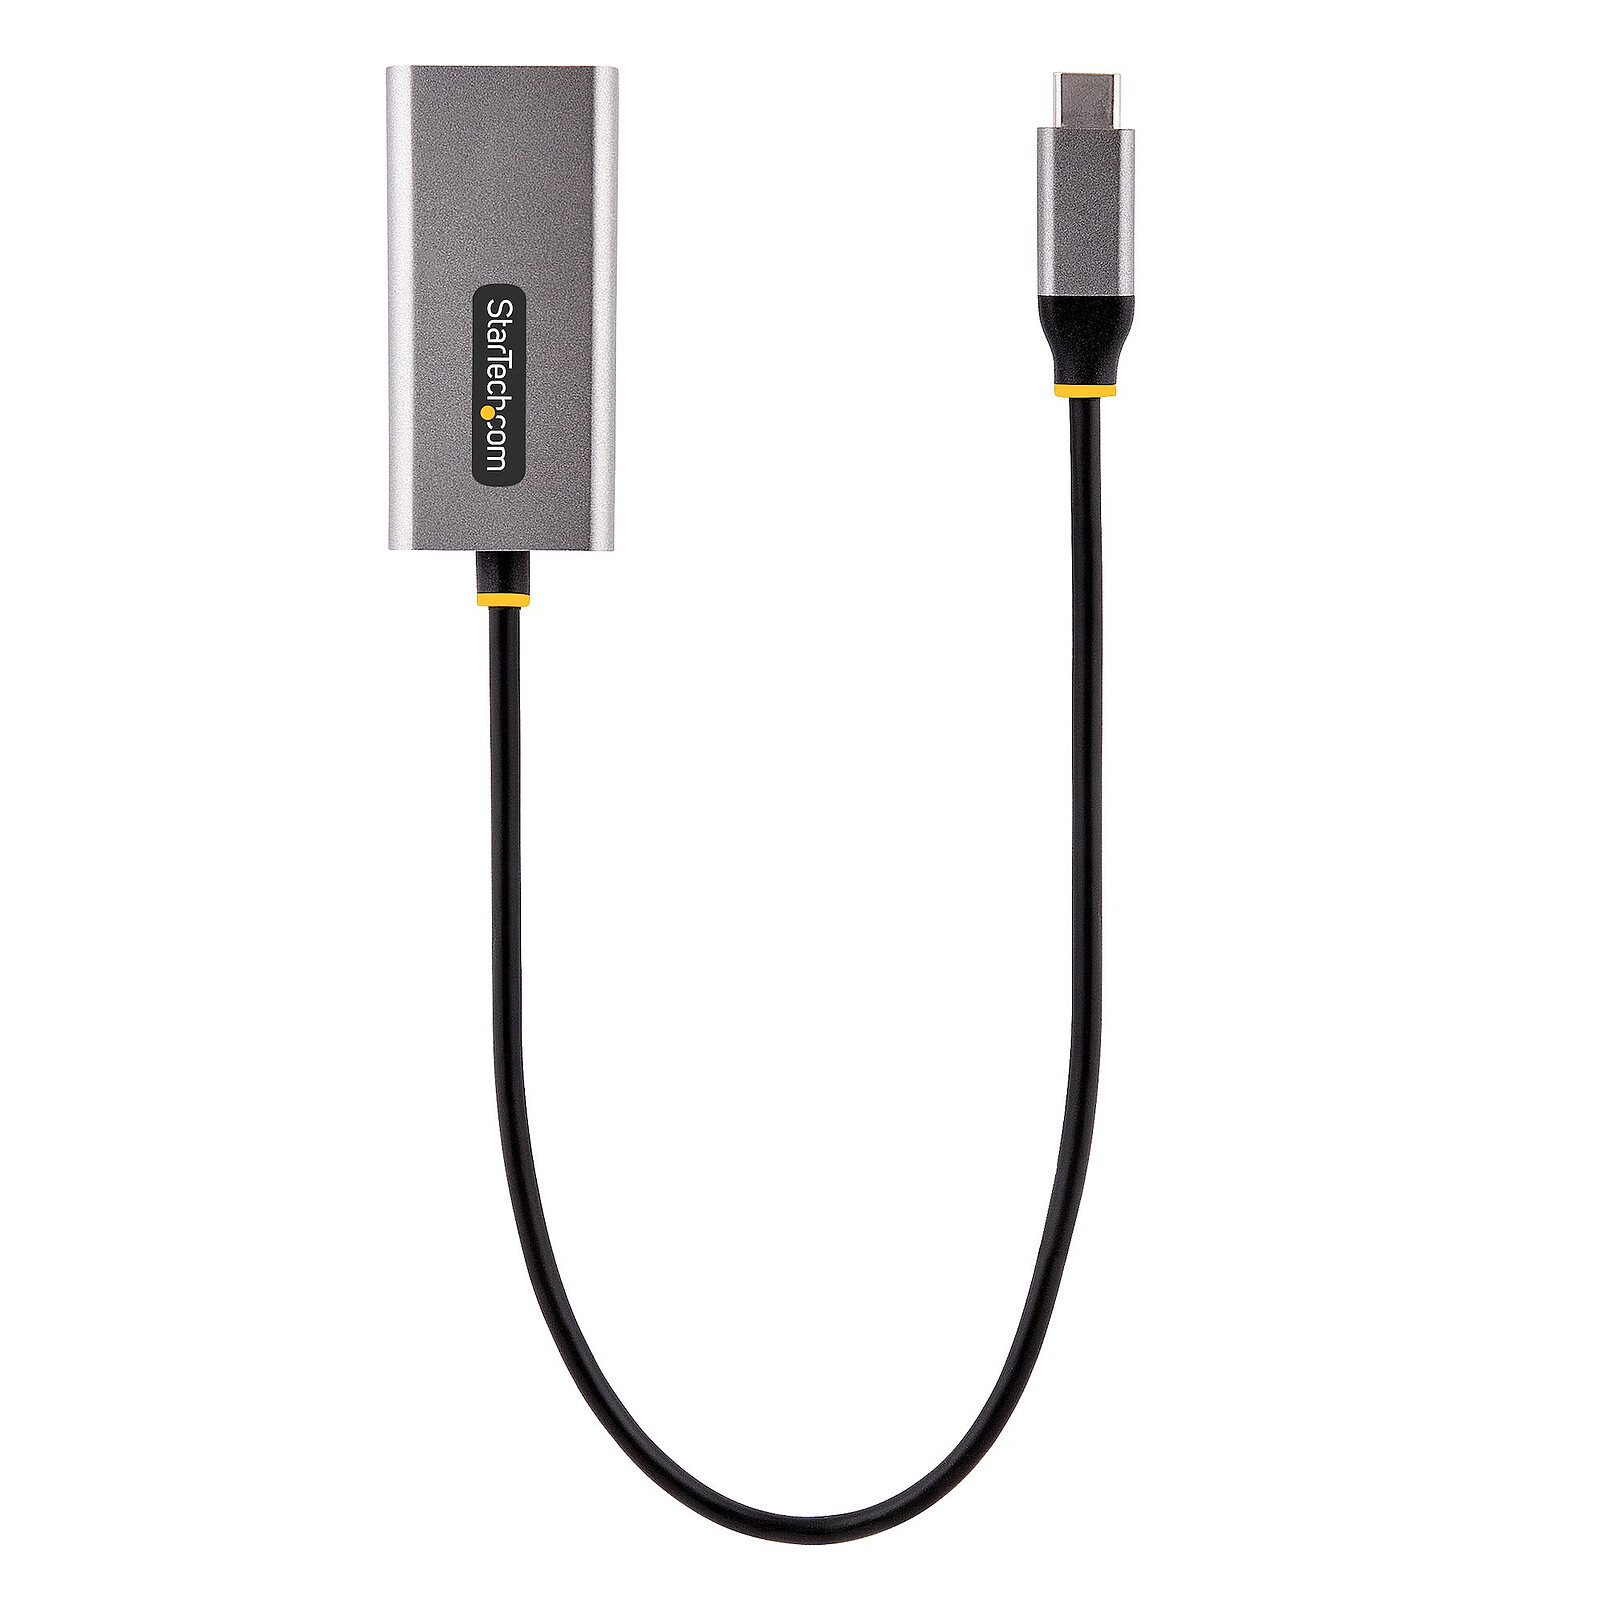 ADAPTATEUR USB-C / MICRO-USB, M / F, METAL, NOIR